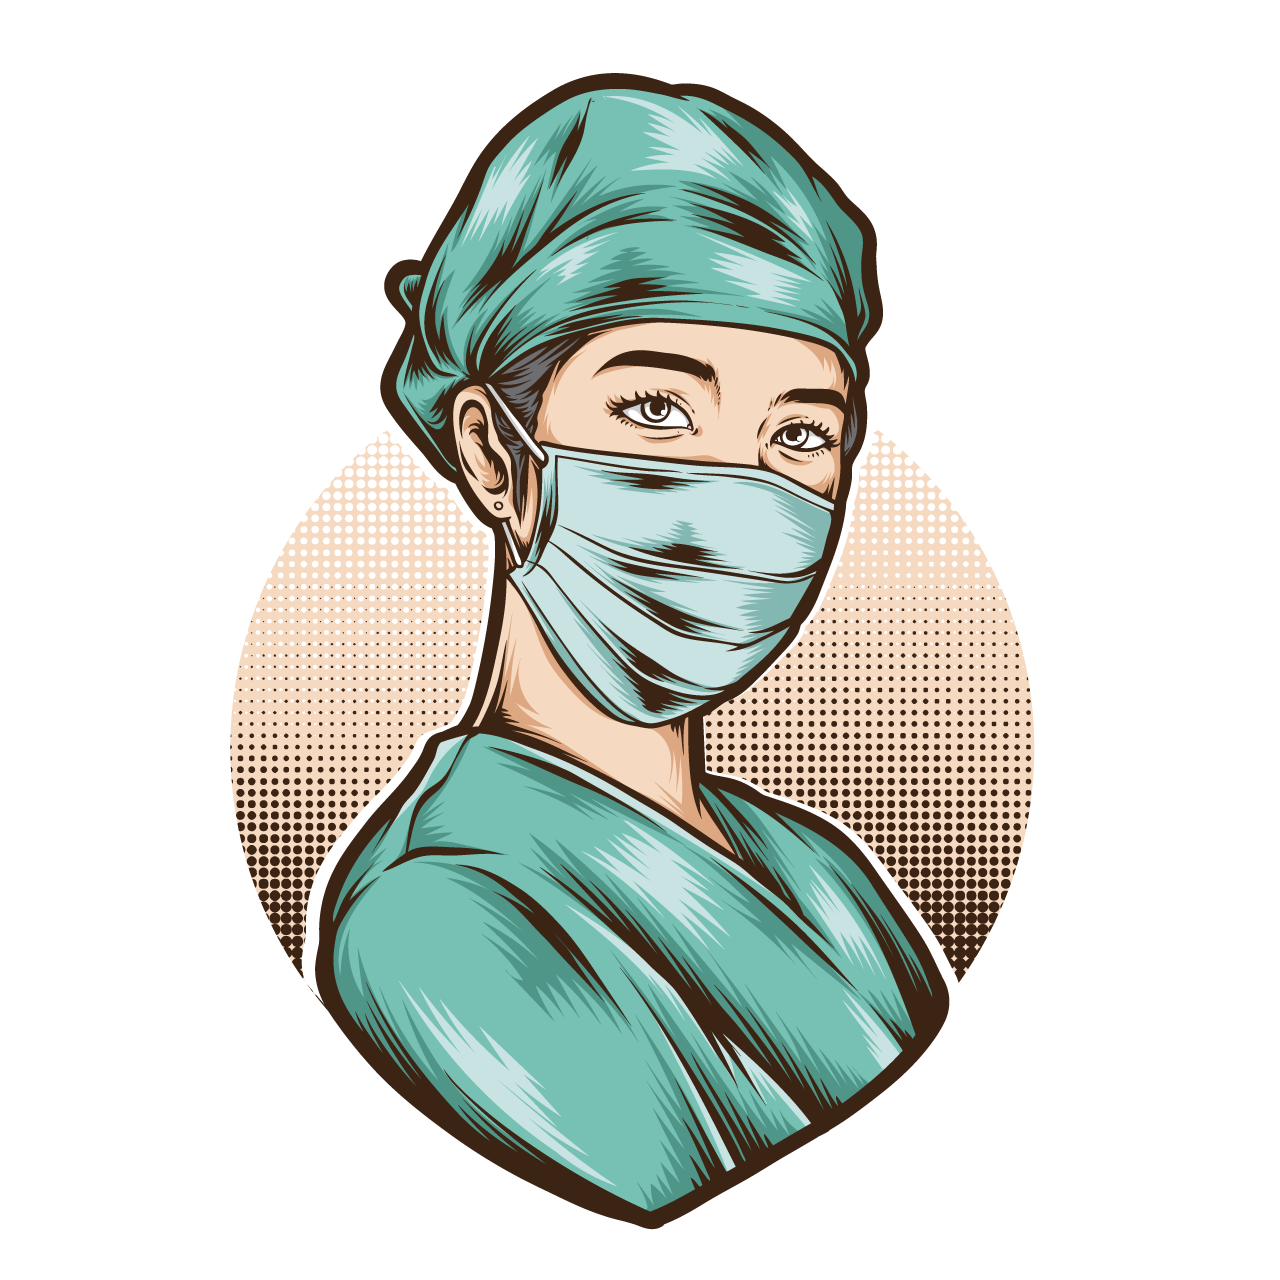 Female nurse wearing surgery mask cartoon illustration image hand drawing sketch